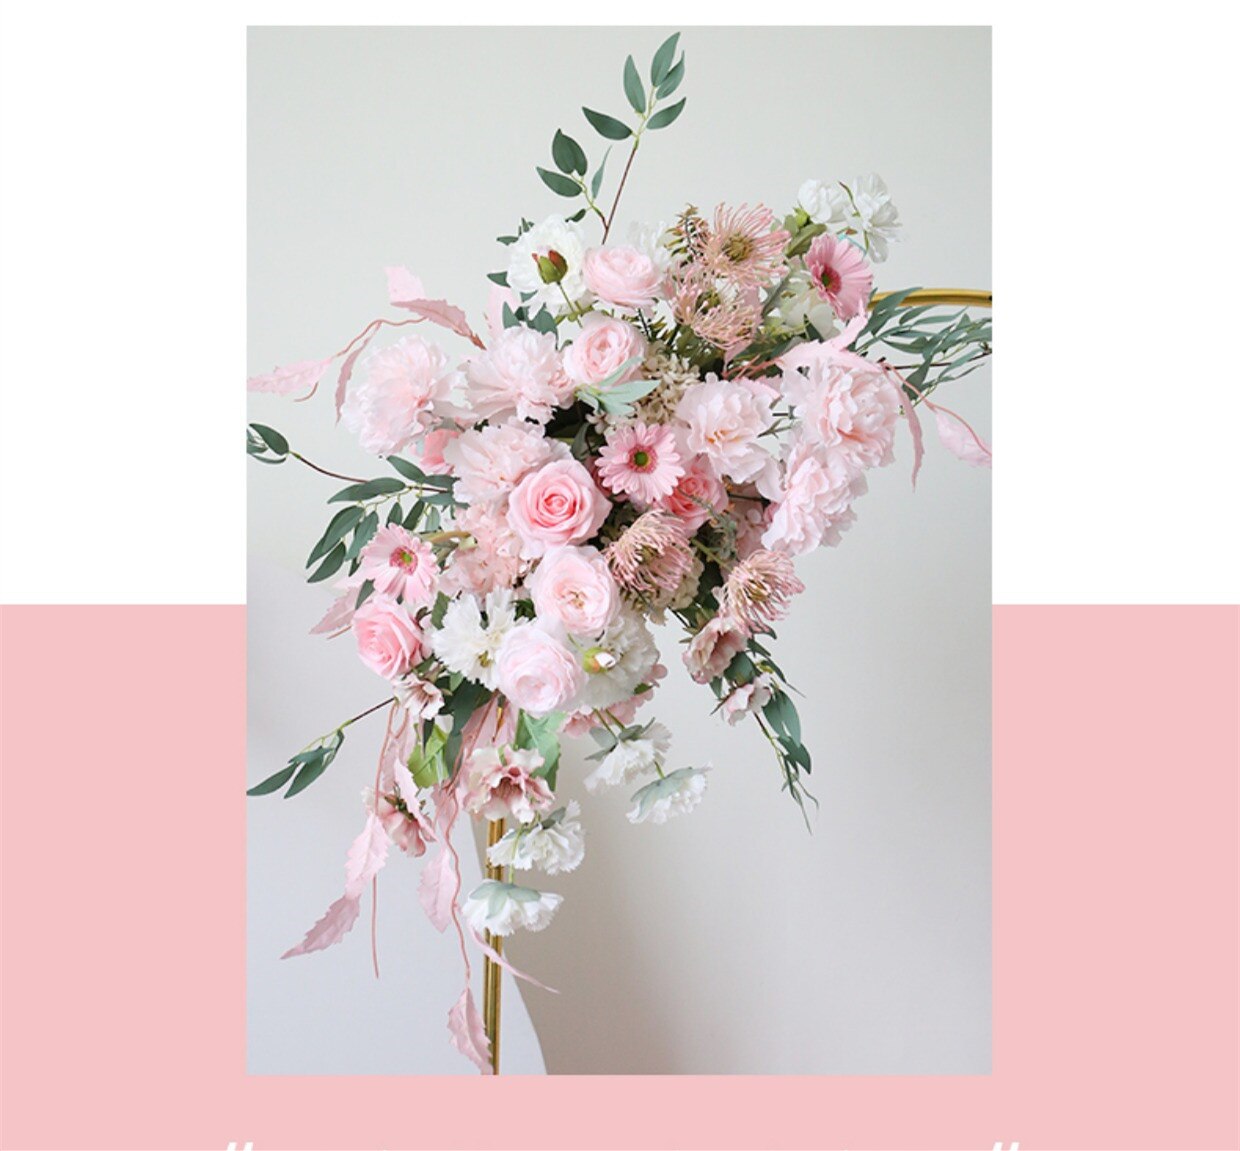 diy flower arrangements for wedding centerpieces1